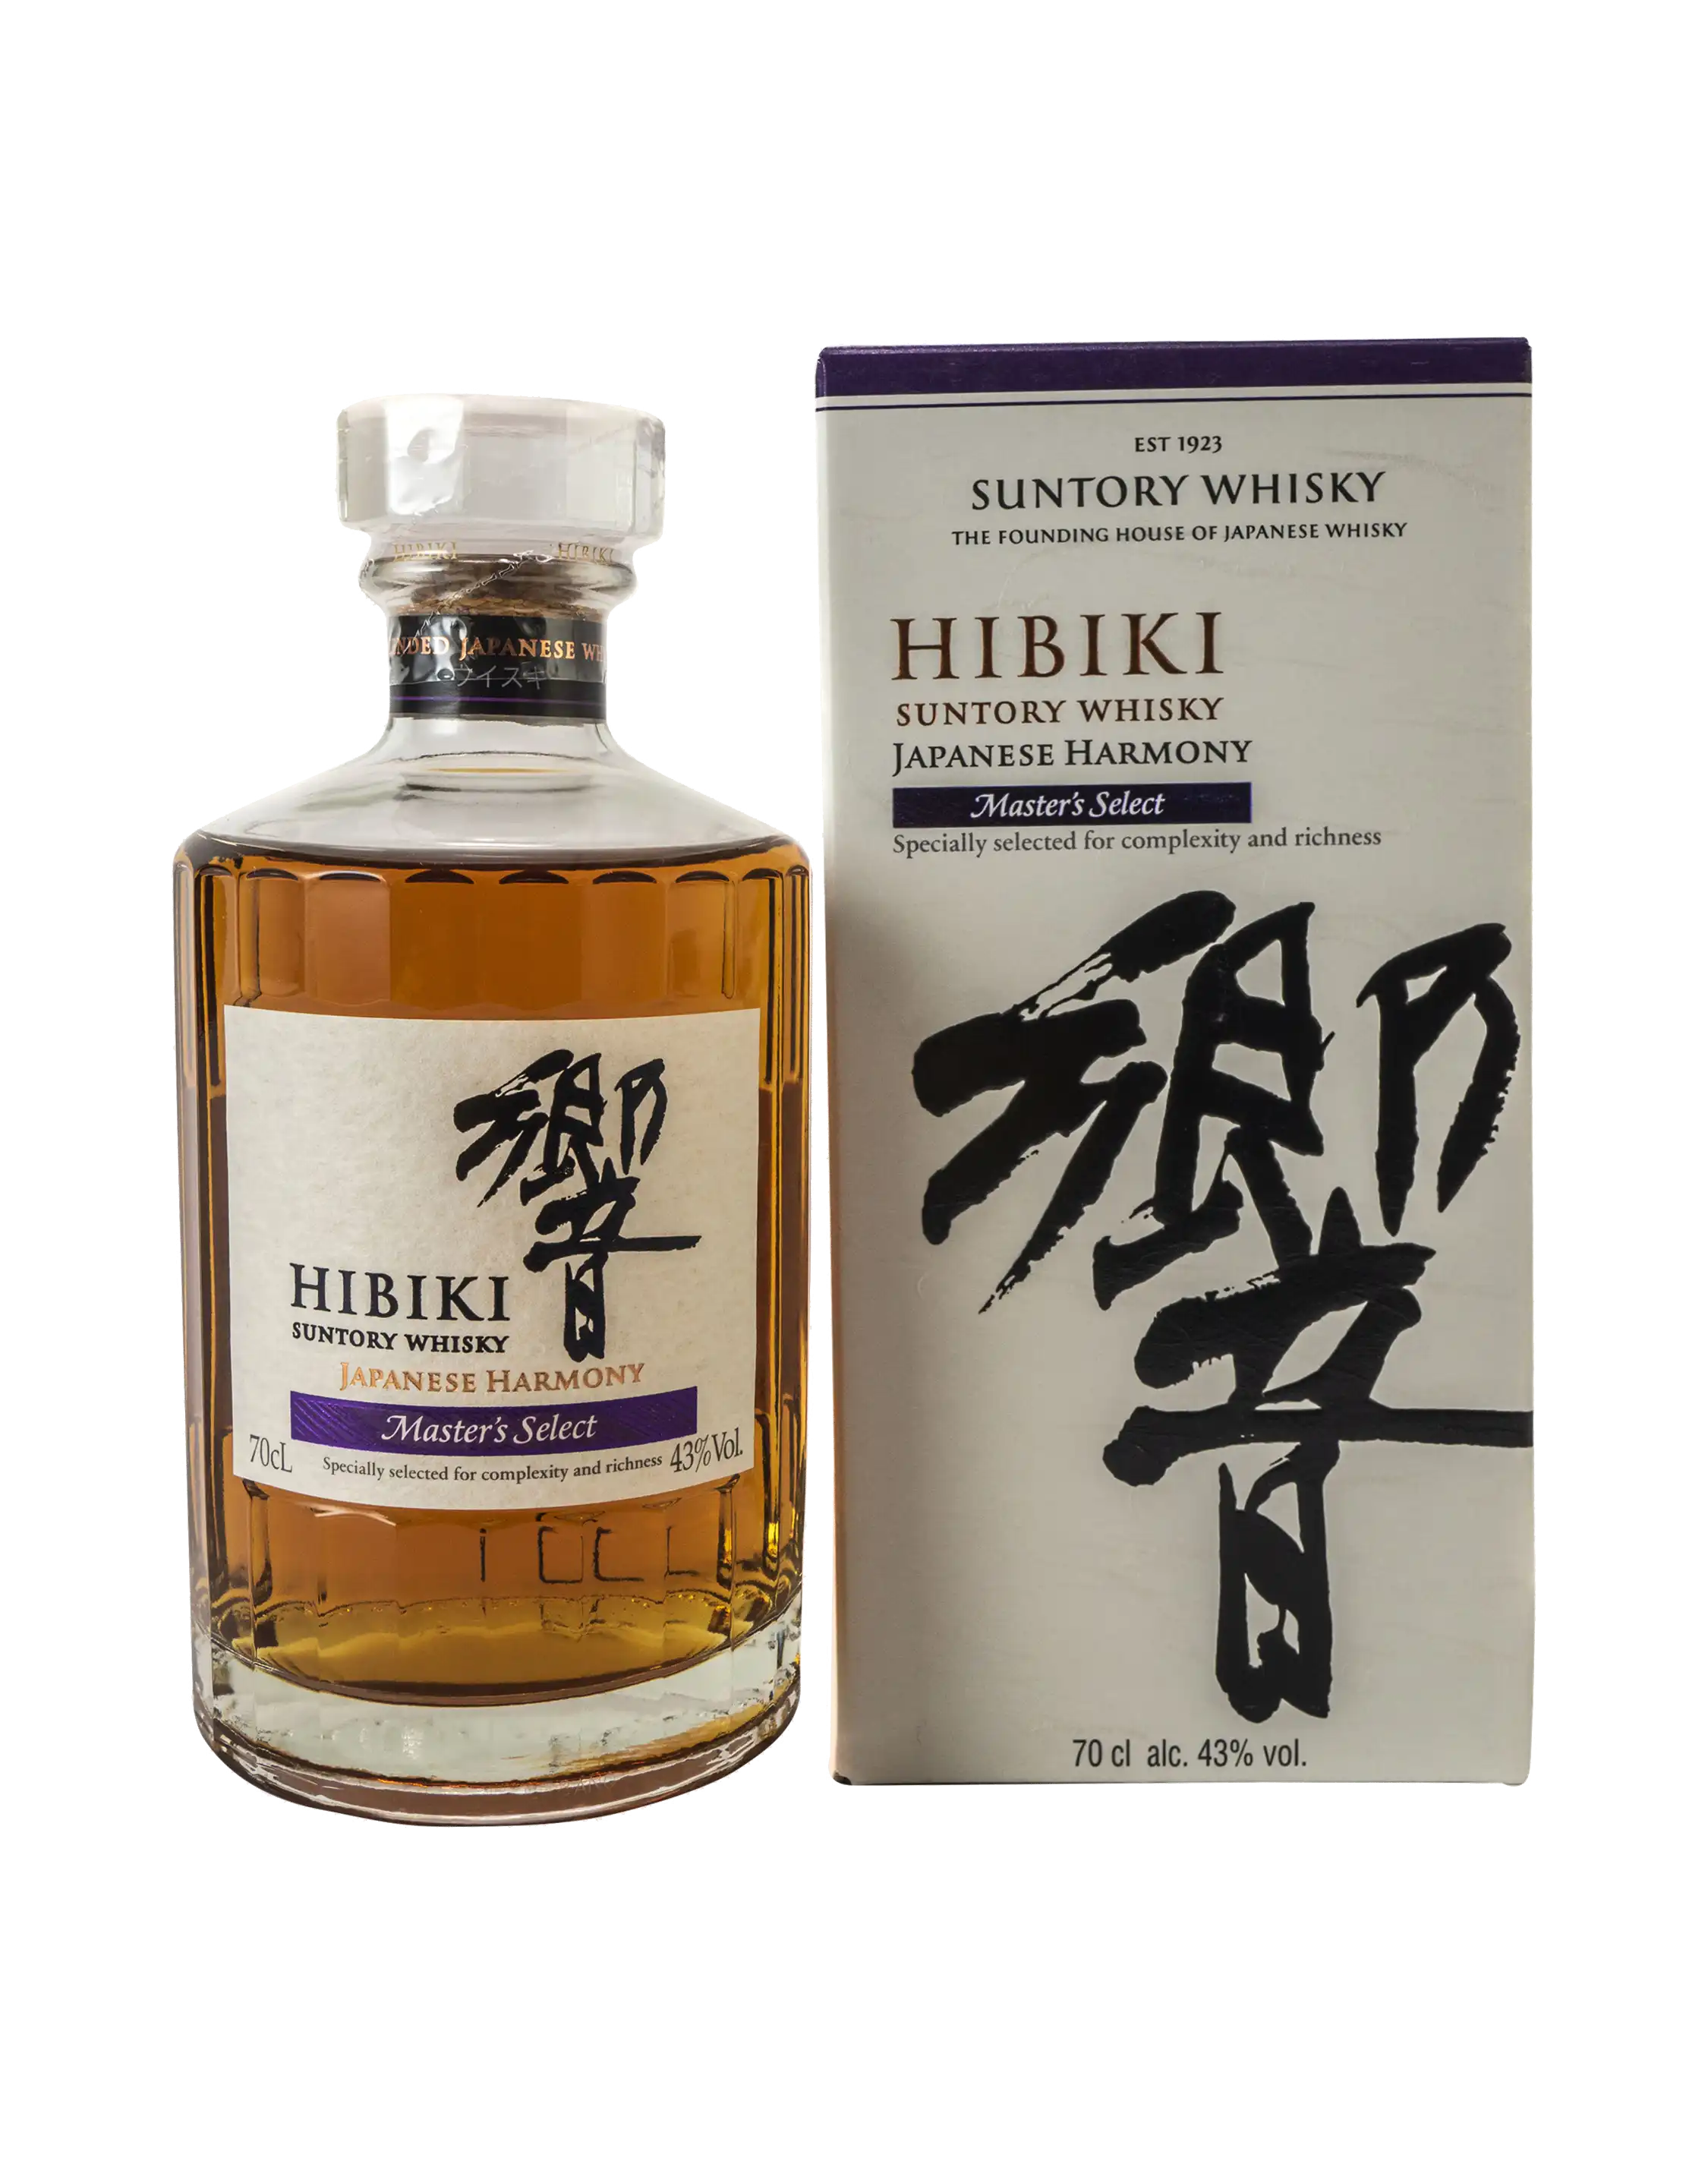 Hibiki Japanese Harmony Master's Select 2018